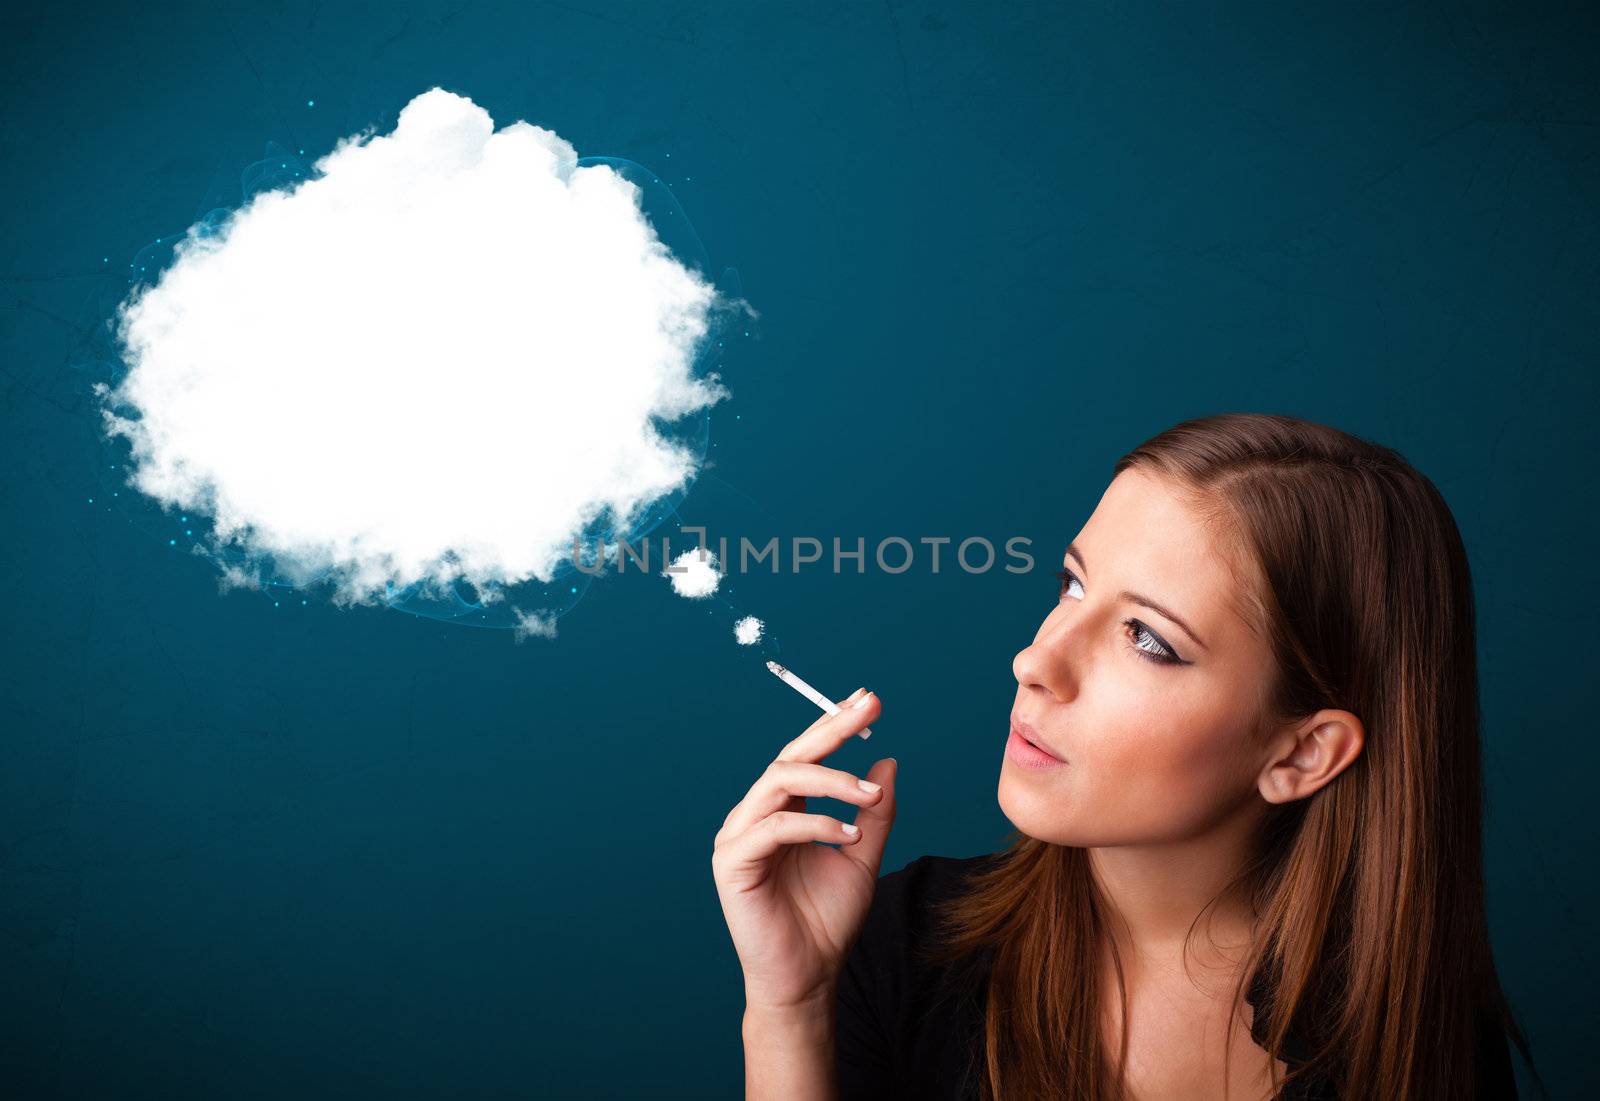 Young woman smoking unhealthy cigarette with dense smoke by ra2studio